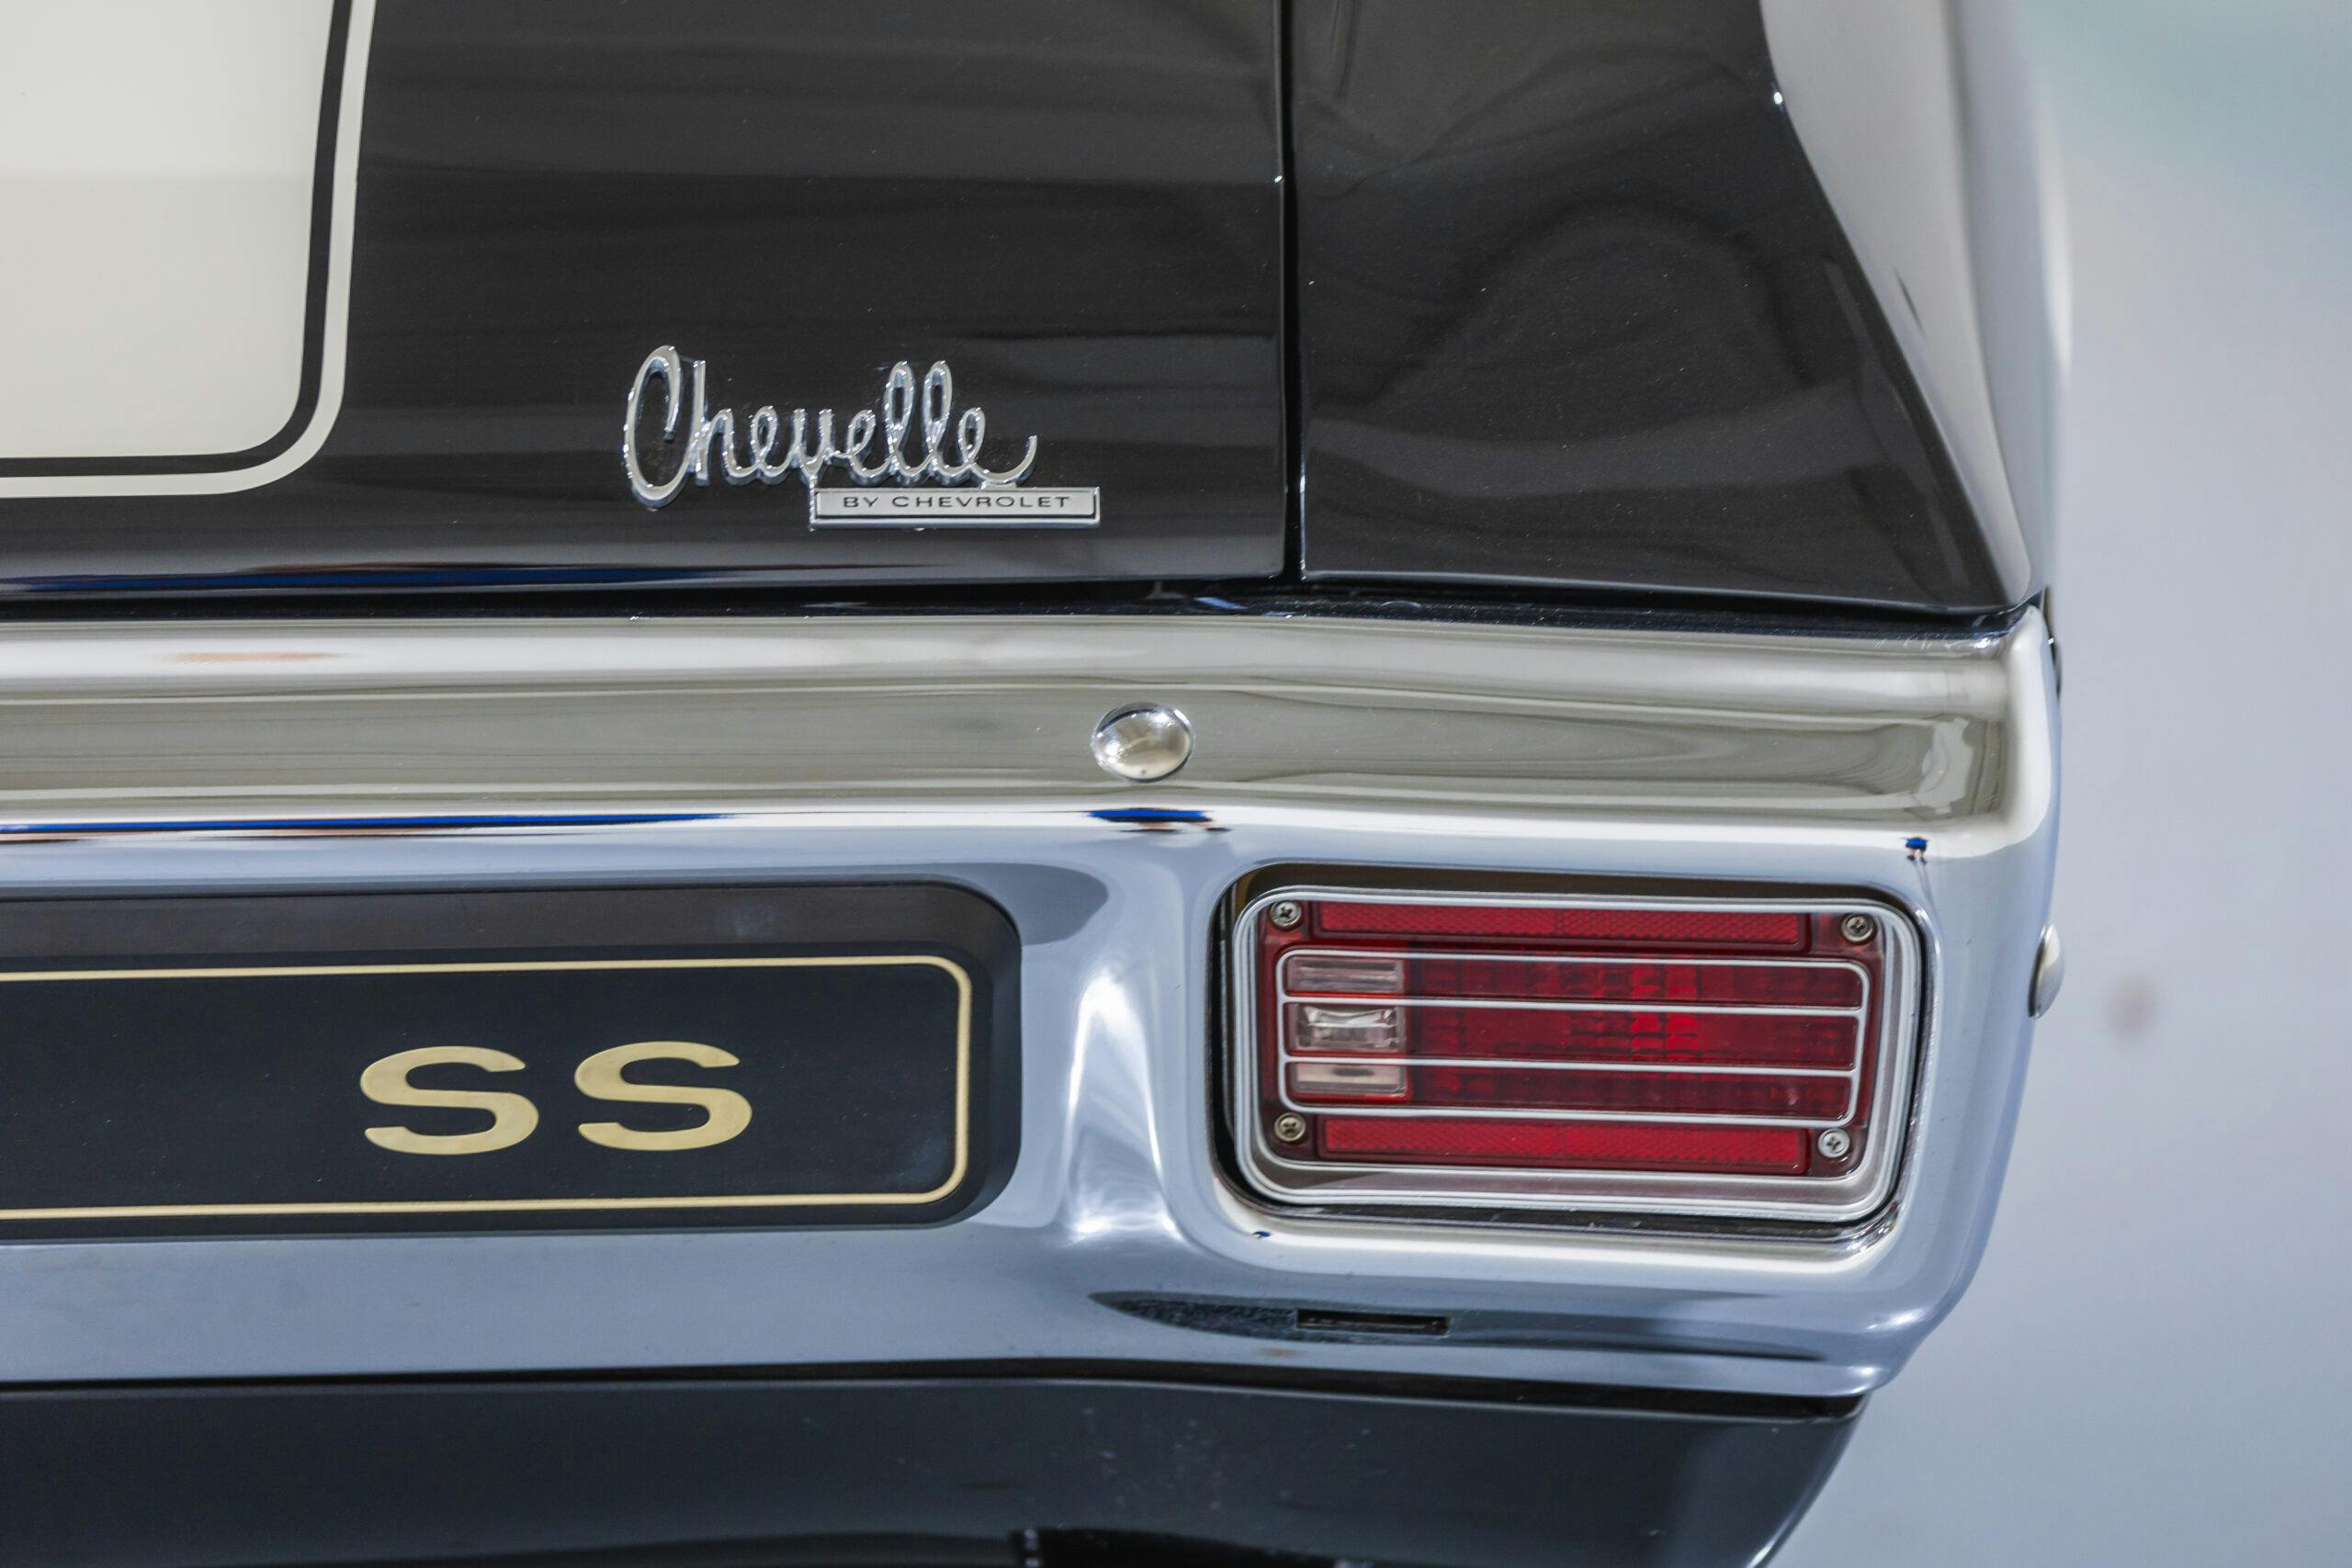 Chevrolet Chevelle taillight